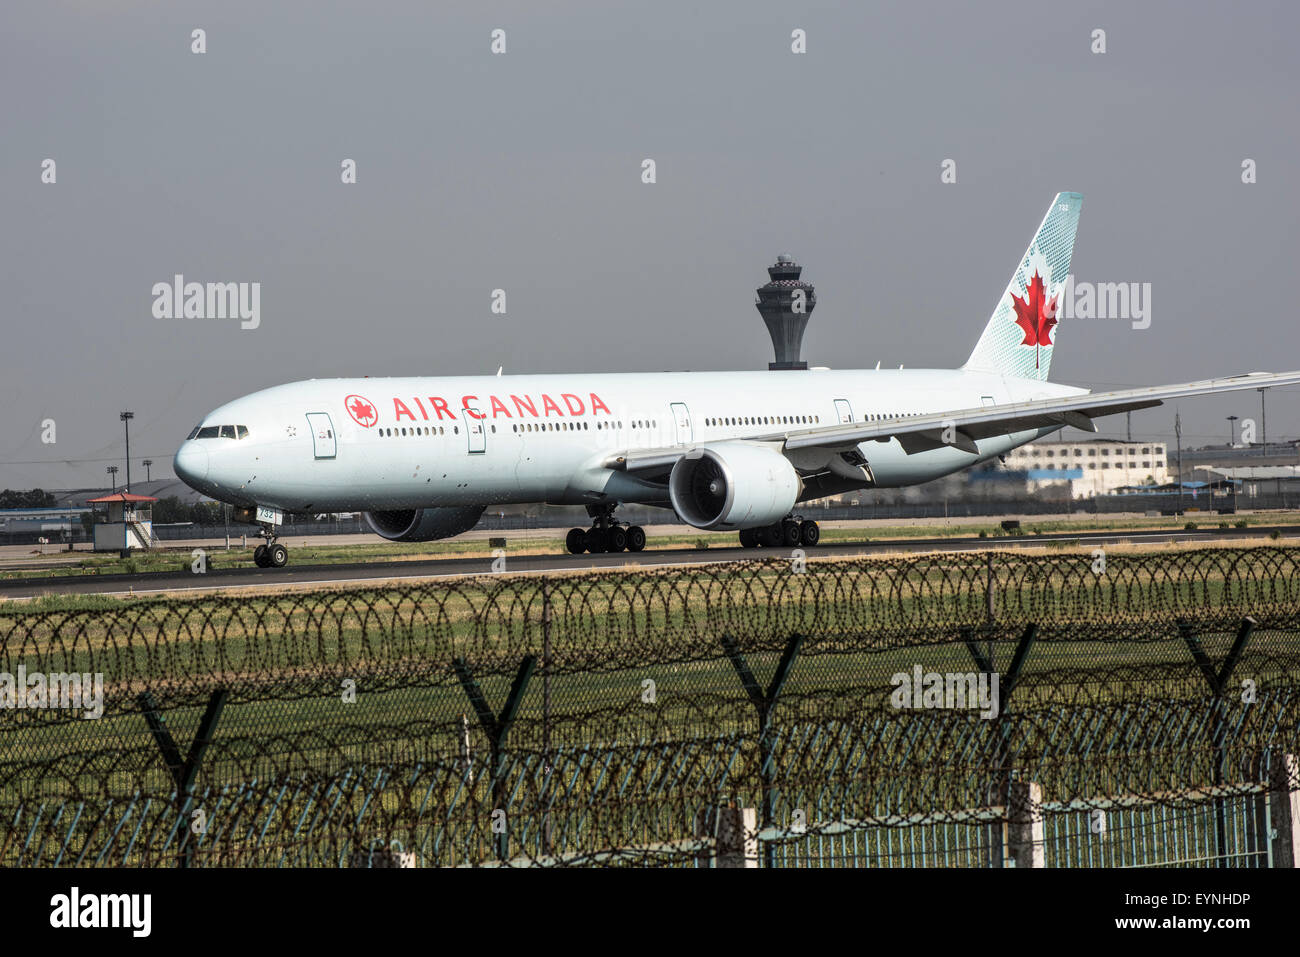 Air Canada avion a atterri à l'aéroport de Pékin Banque D'Images